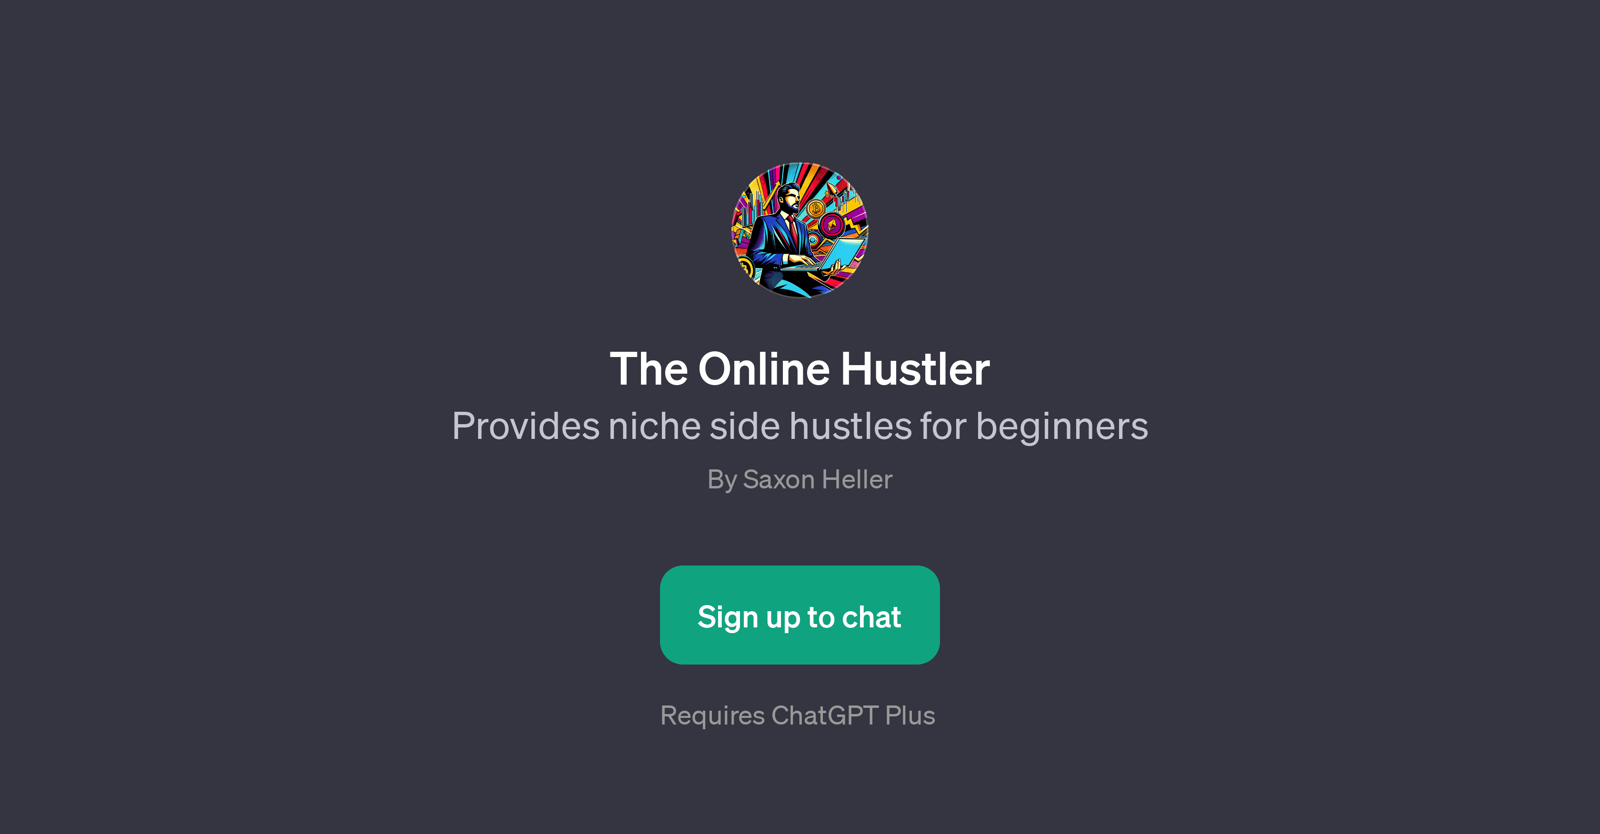 The Online Hustler website